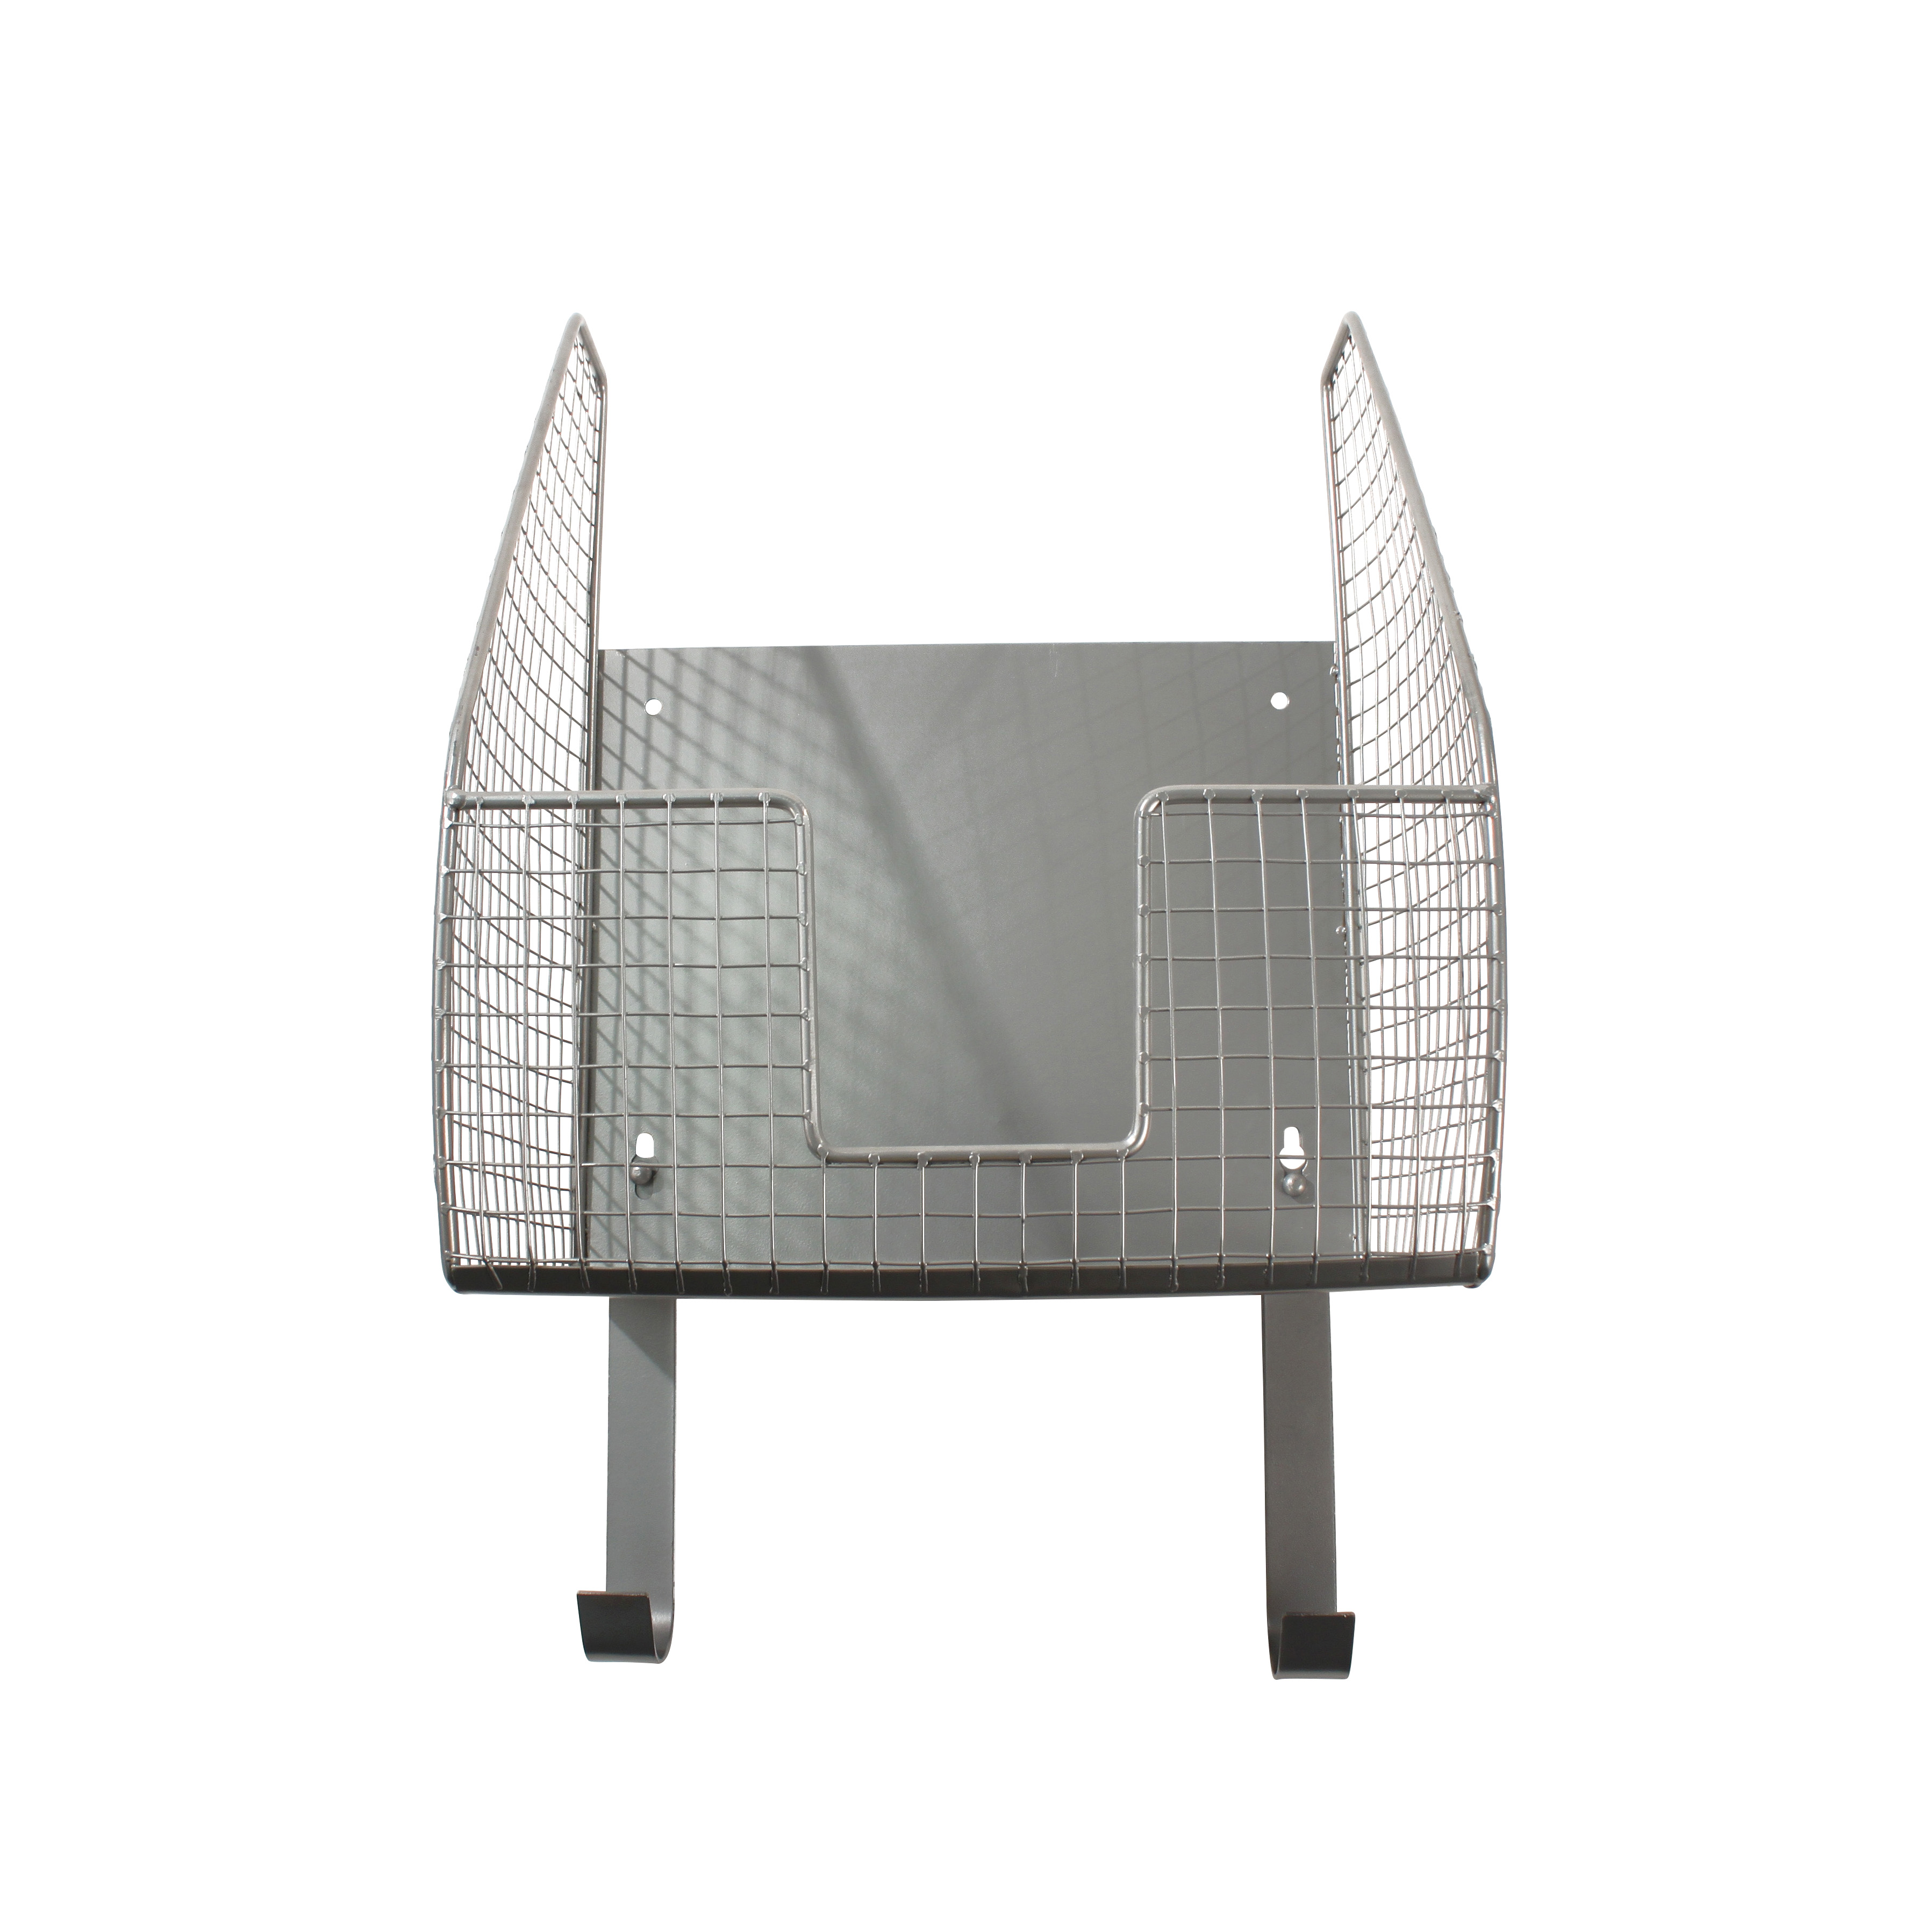 Spectrum Diversified Steel Ironing Board Holder with Storage Basket, Heat Resistant, Pewter - image 3 of 5